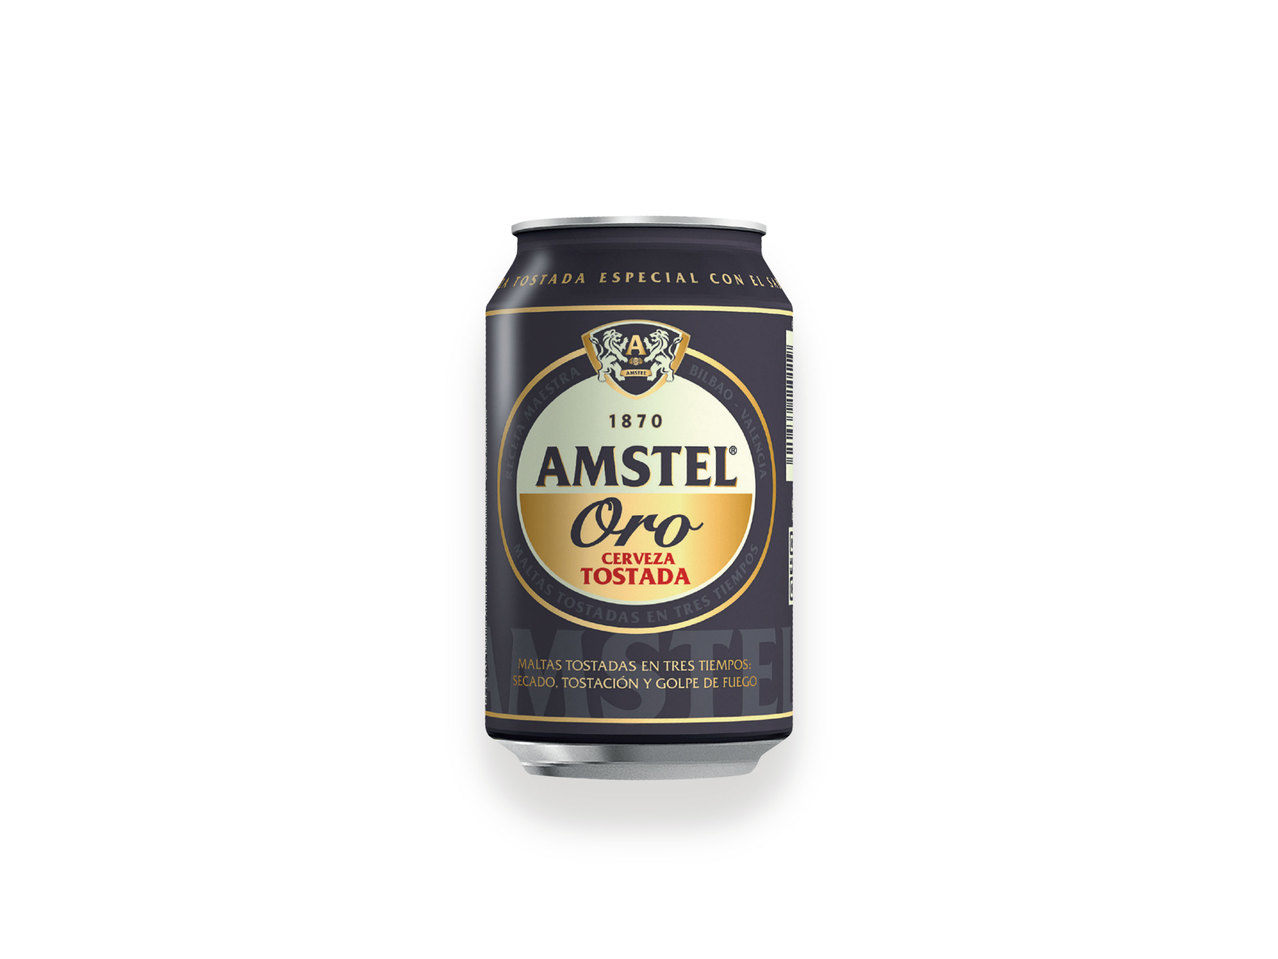 "Amstel" Oro